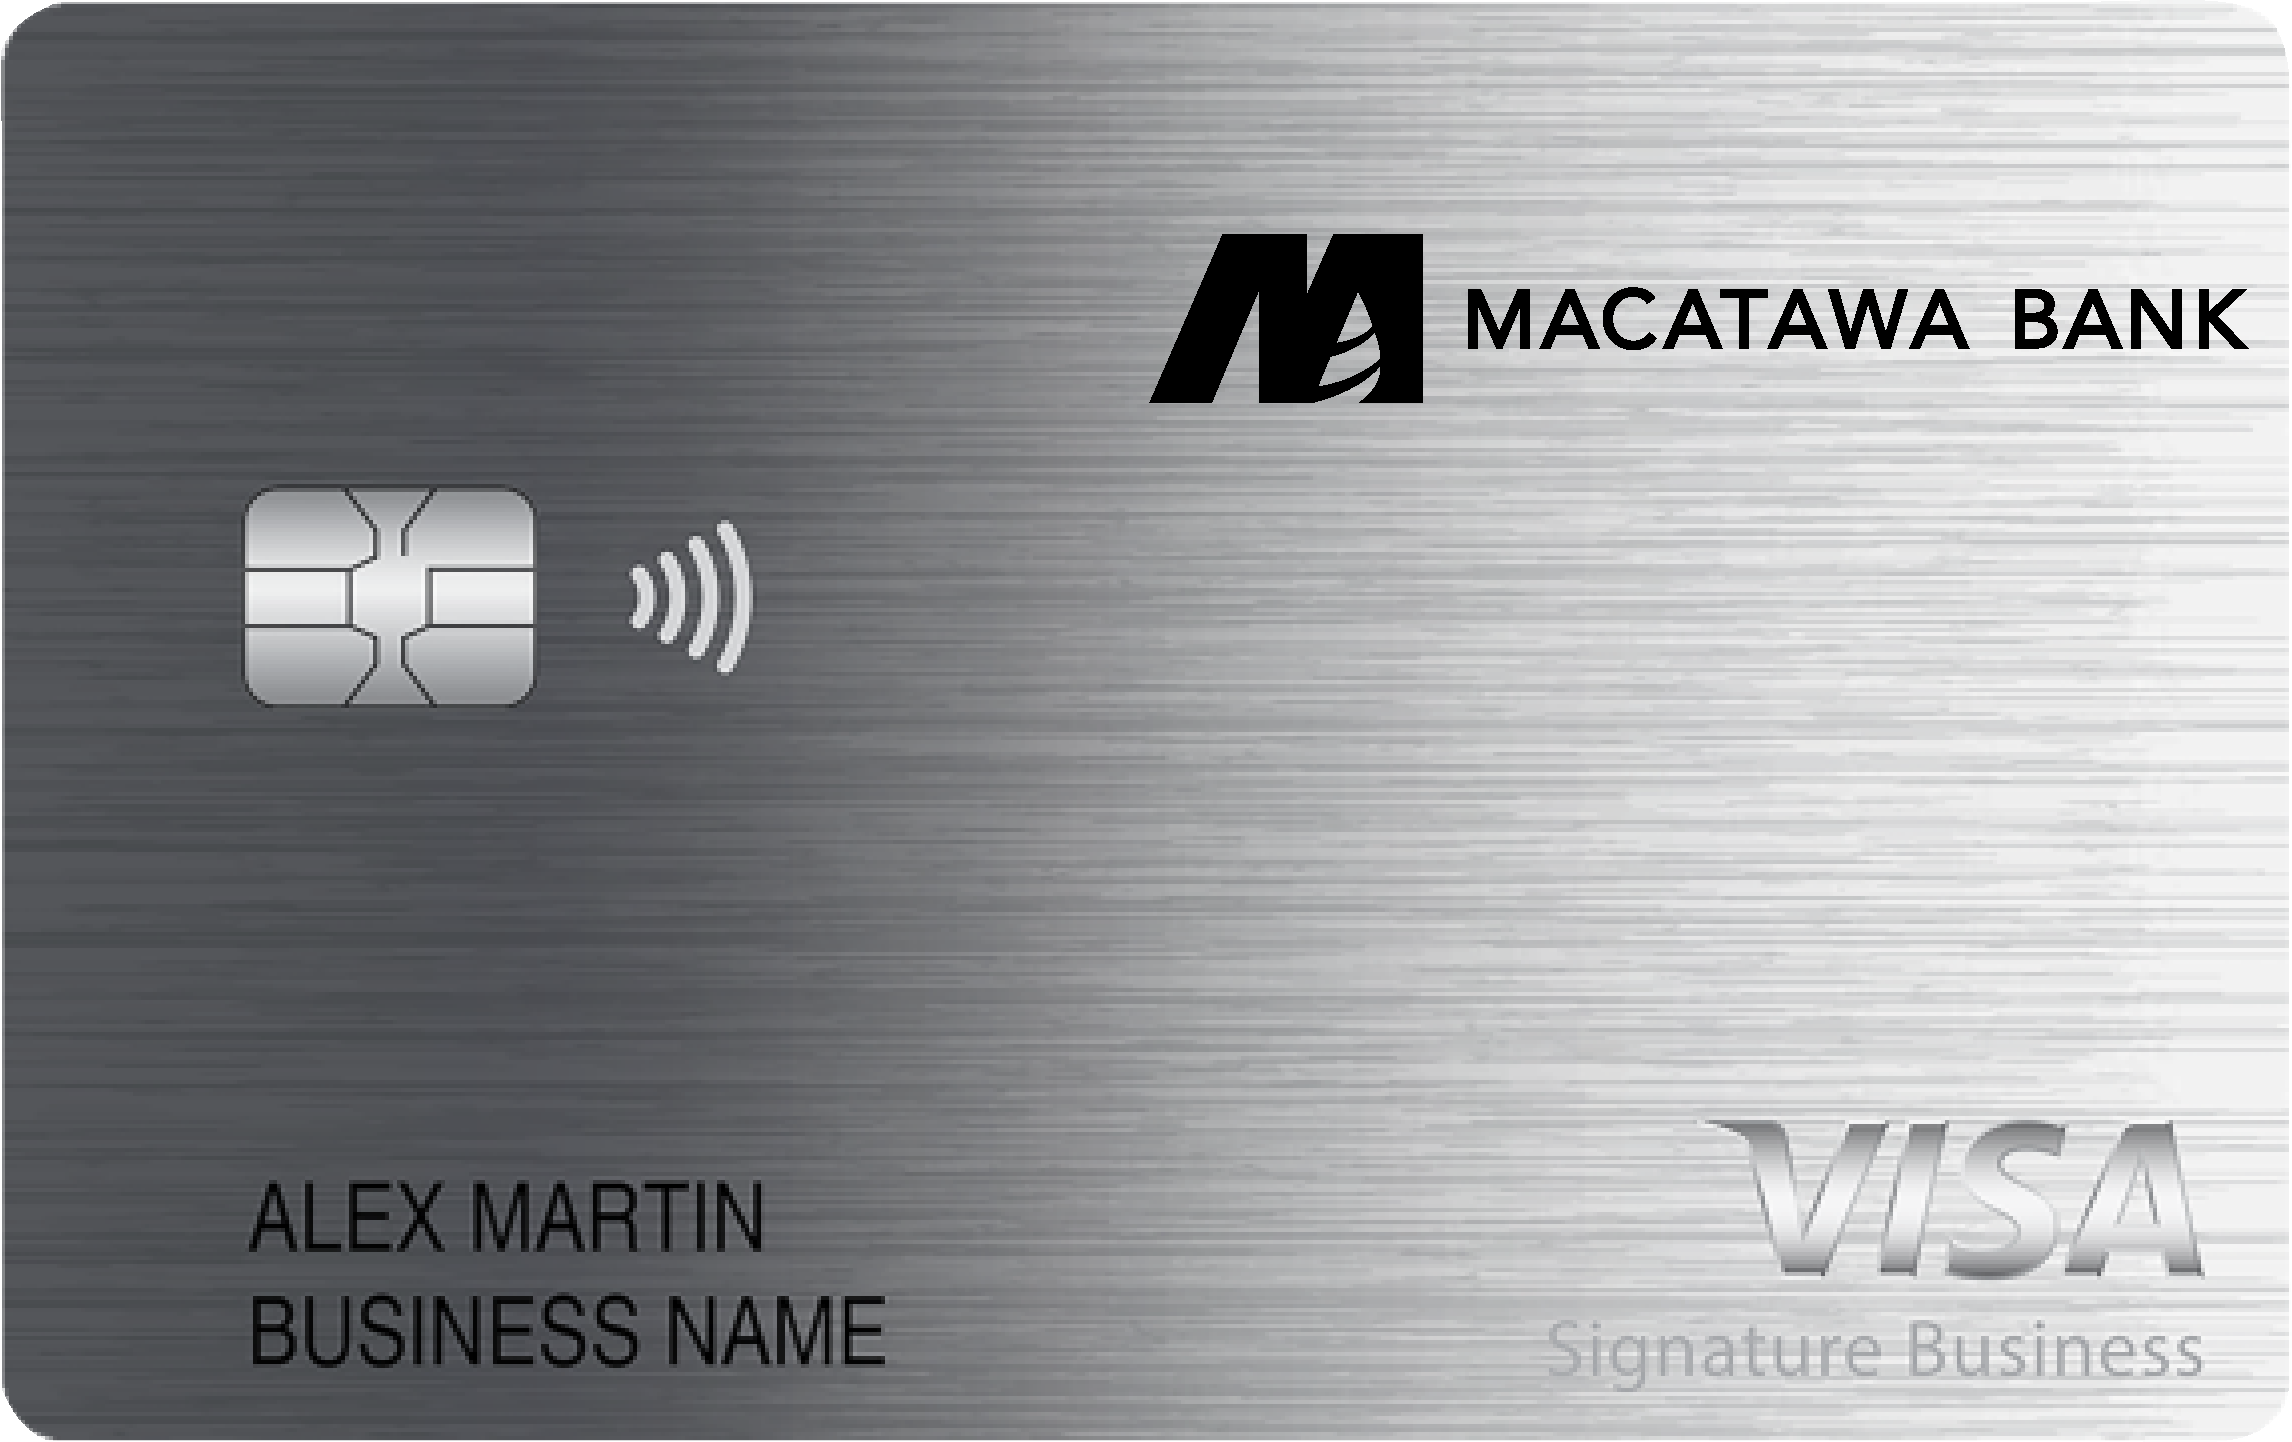 Macatawa Bank Smart Business Rewards Card